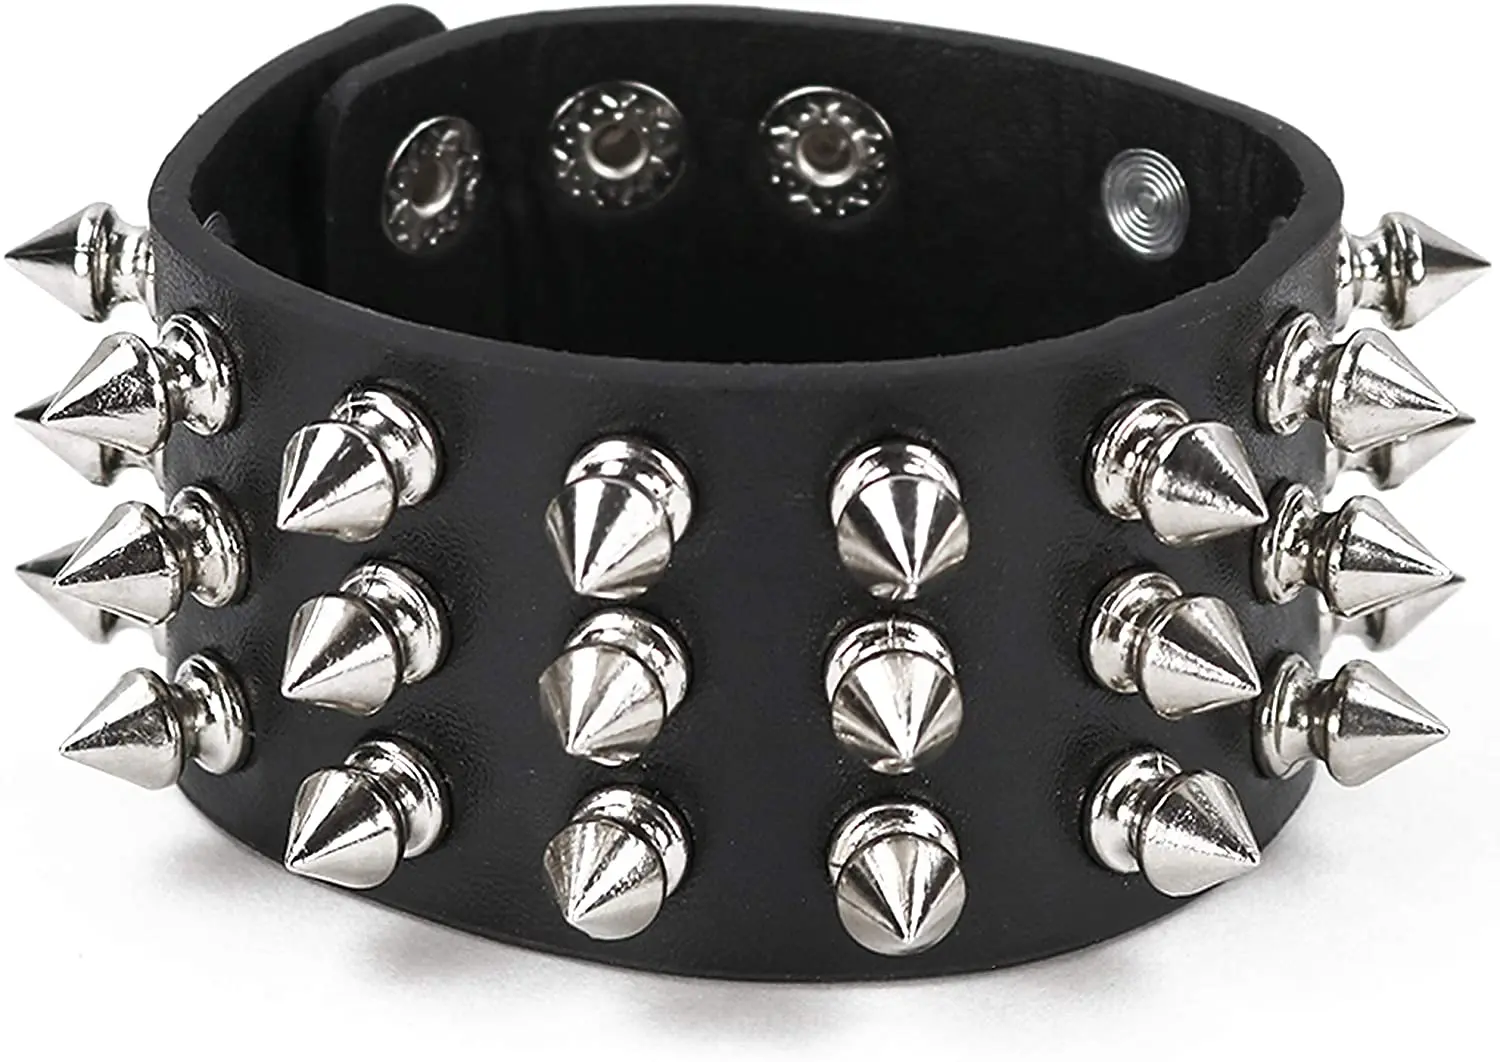 

Black Punk Leather Spike Bracelet - Leather Cuff Biker Bracelet with Spikes for Men, Women and Kids